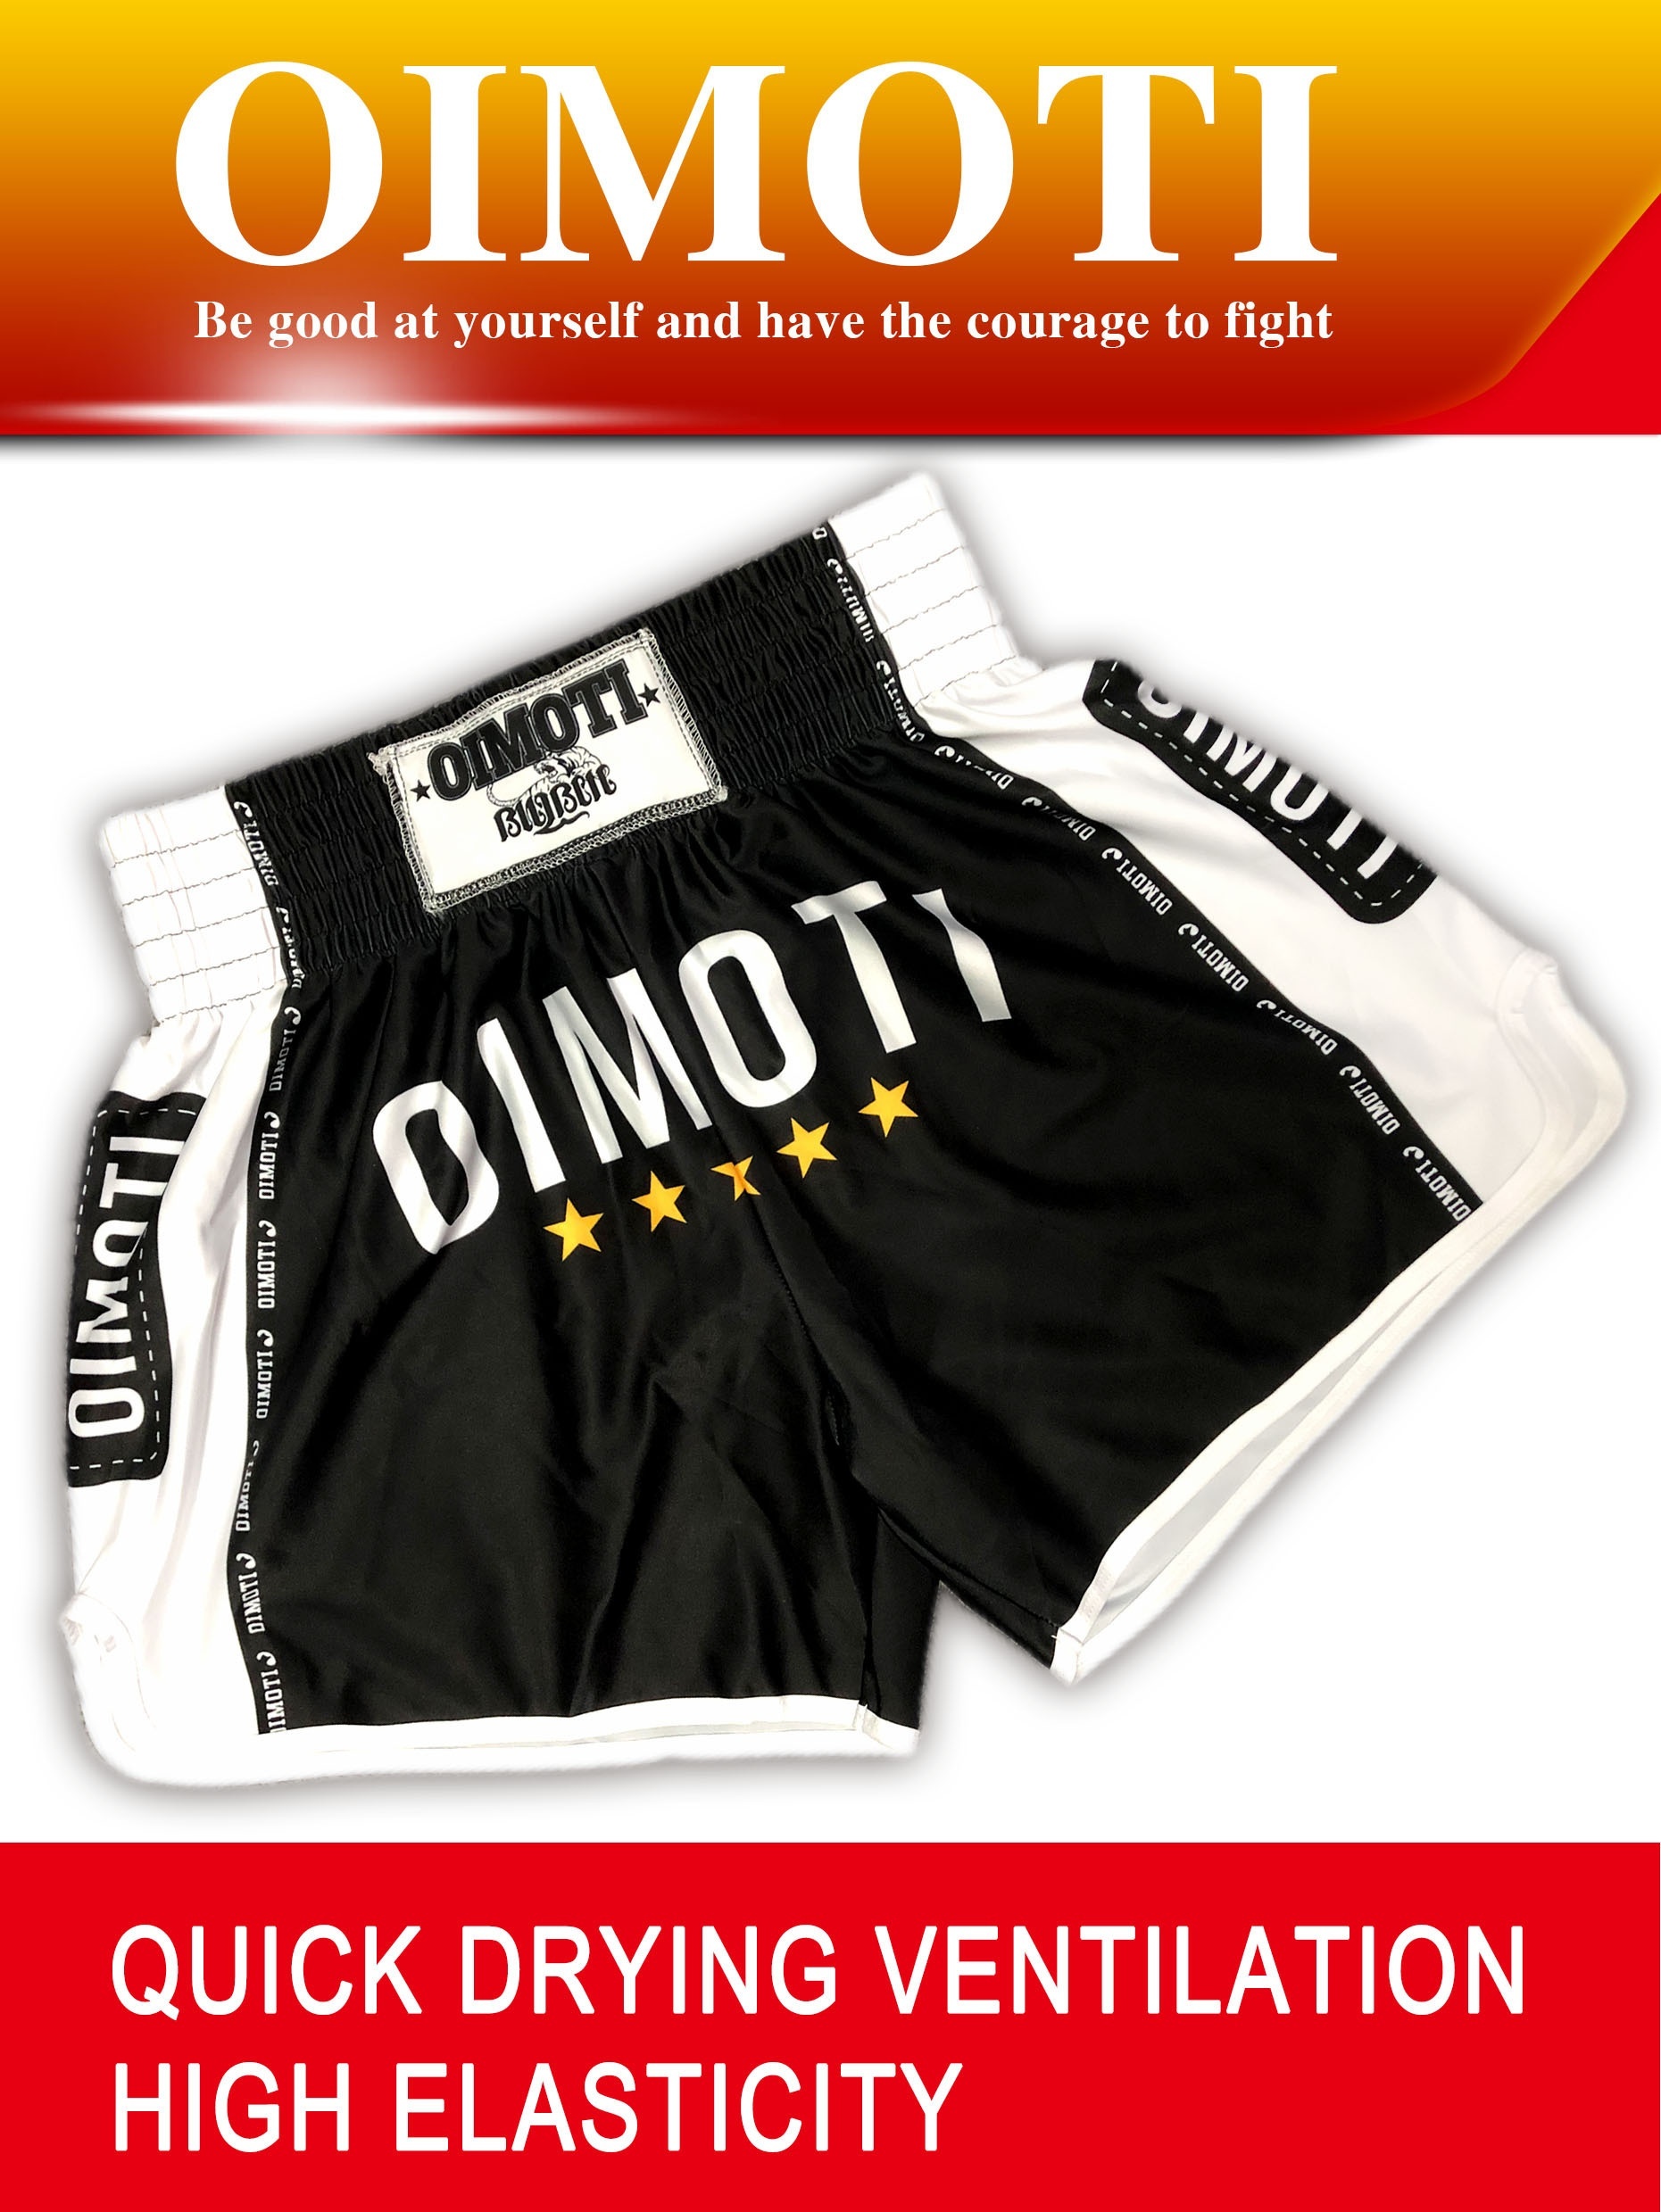 Pantalones de boxeo para hombre Shorts de boxeo